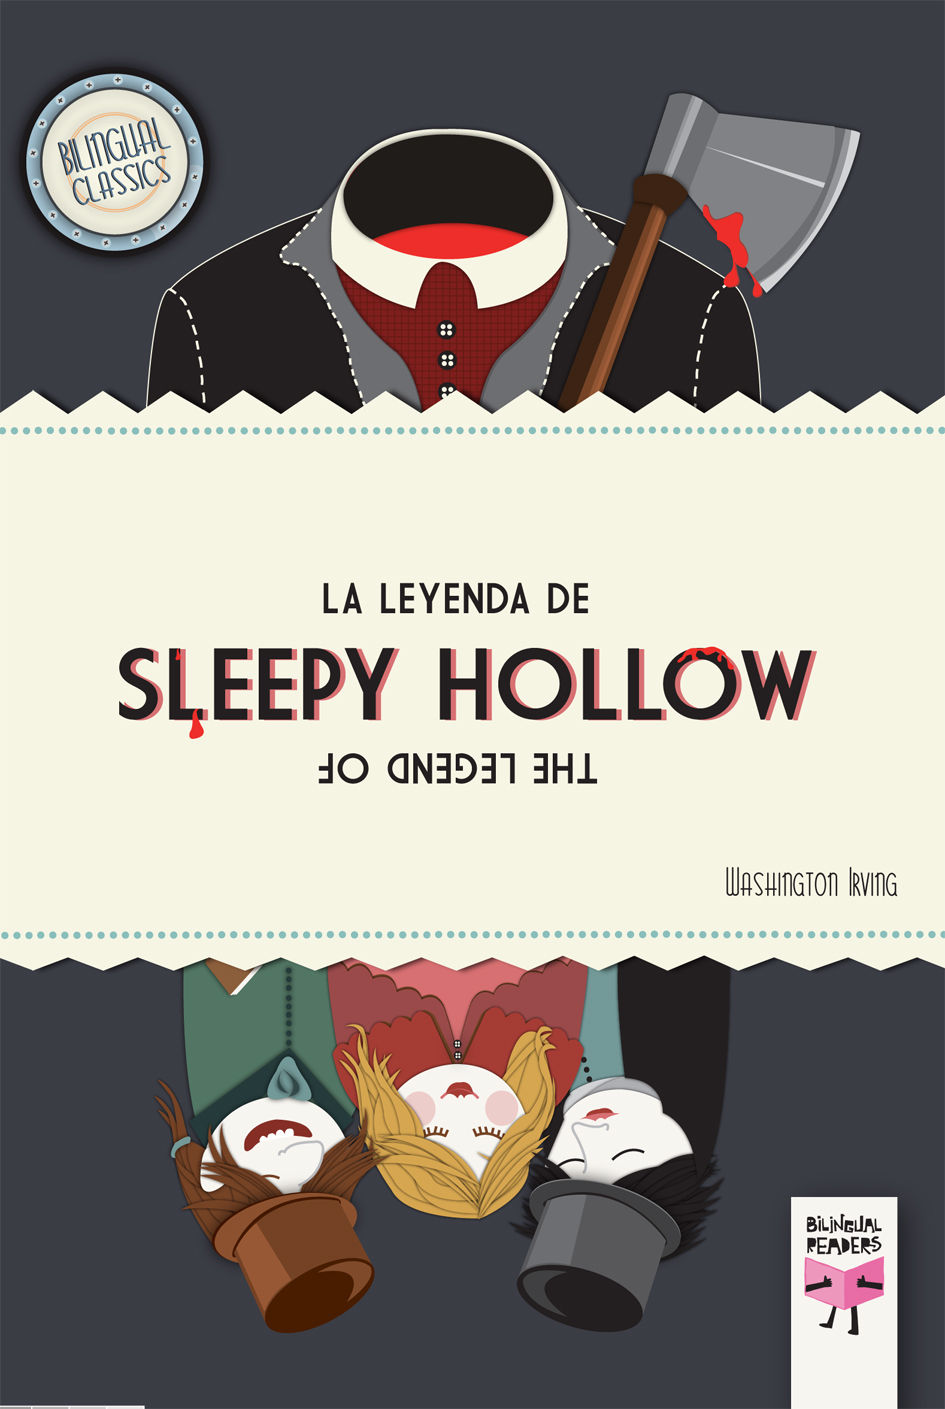 LA LEYENDA DE SLEEPY HOLLOW / THE LEGEND OF SLEEPY HOLLOW. LEYENDA DE SLEEPY HOLLOW, LA = LEGEND OF SLEEPY HOLLOW, THE